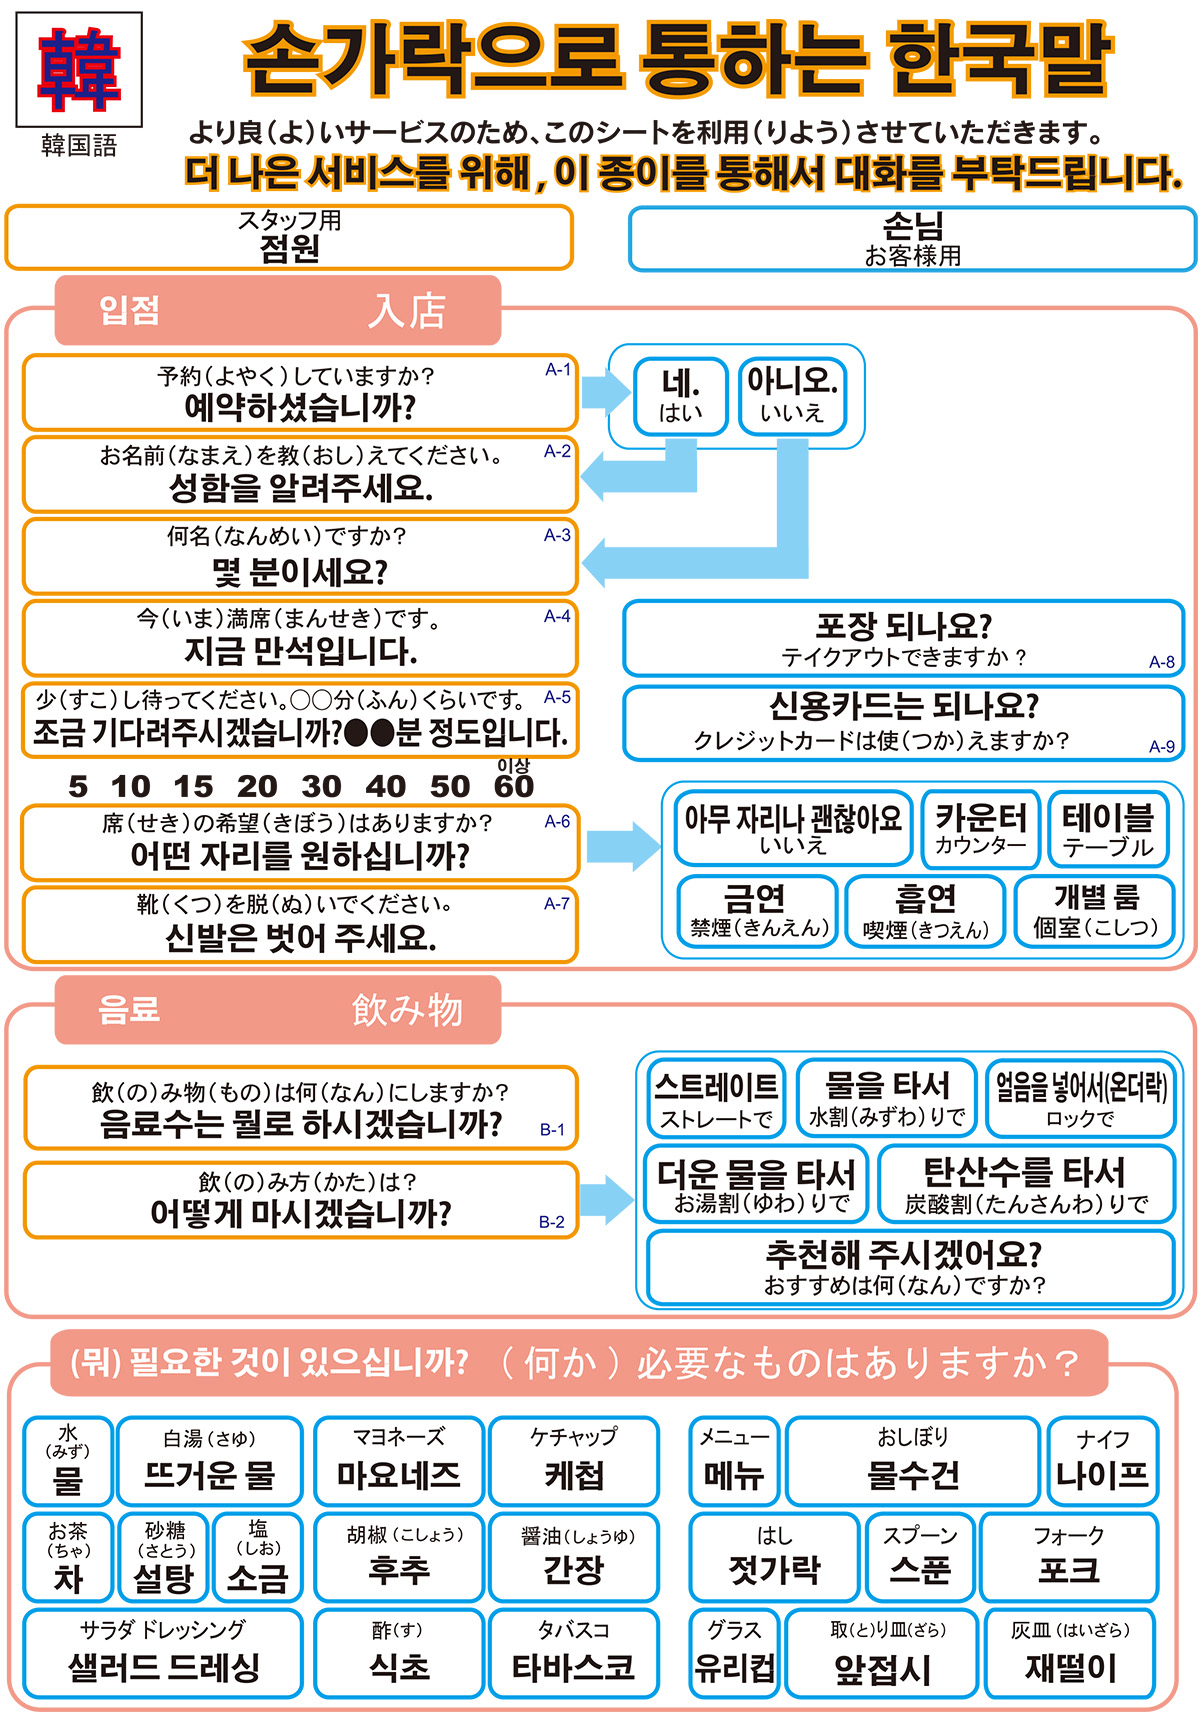 Point & Speak Sheet in Hangul